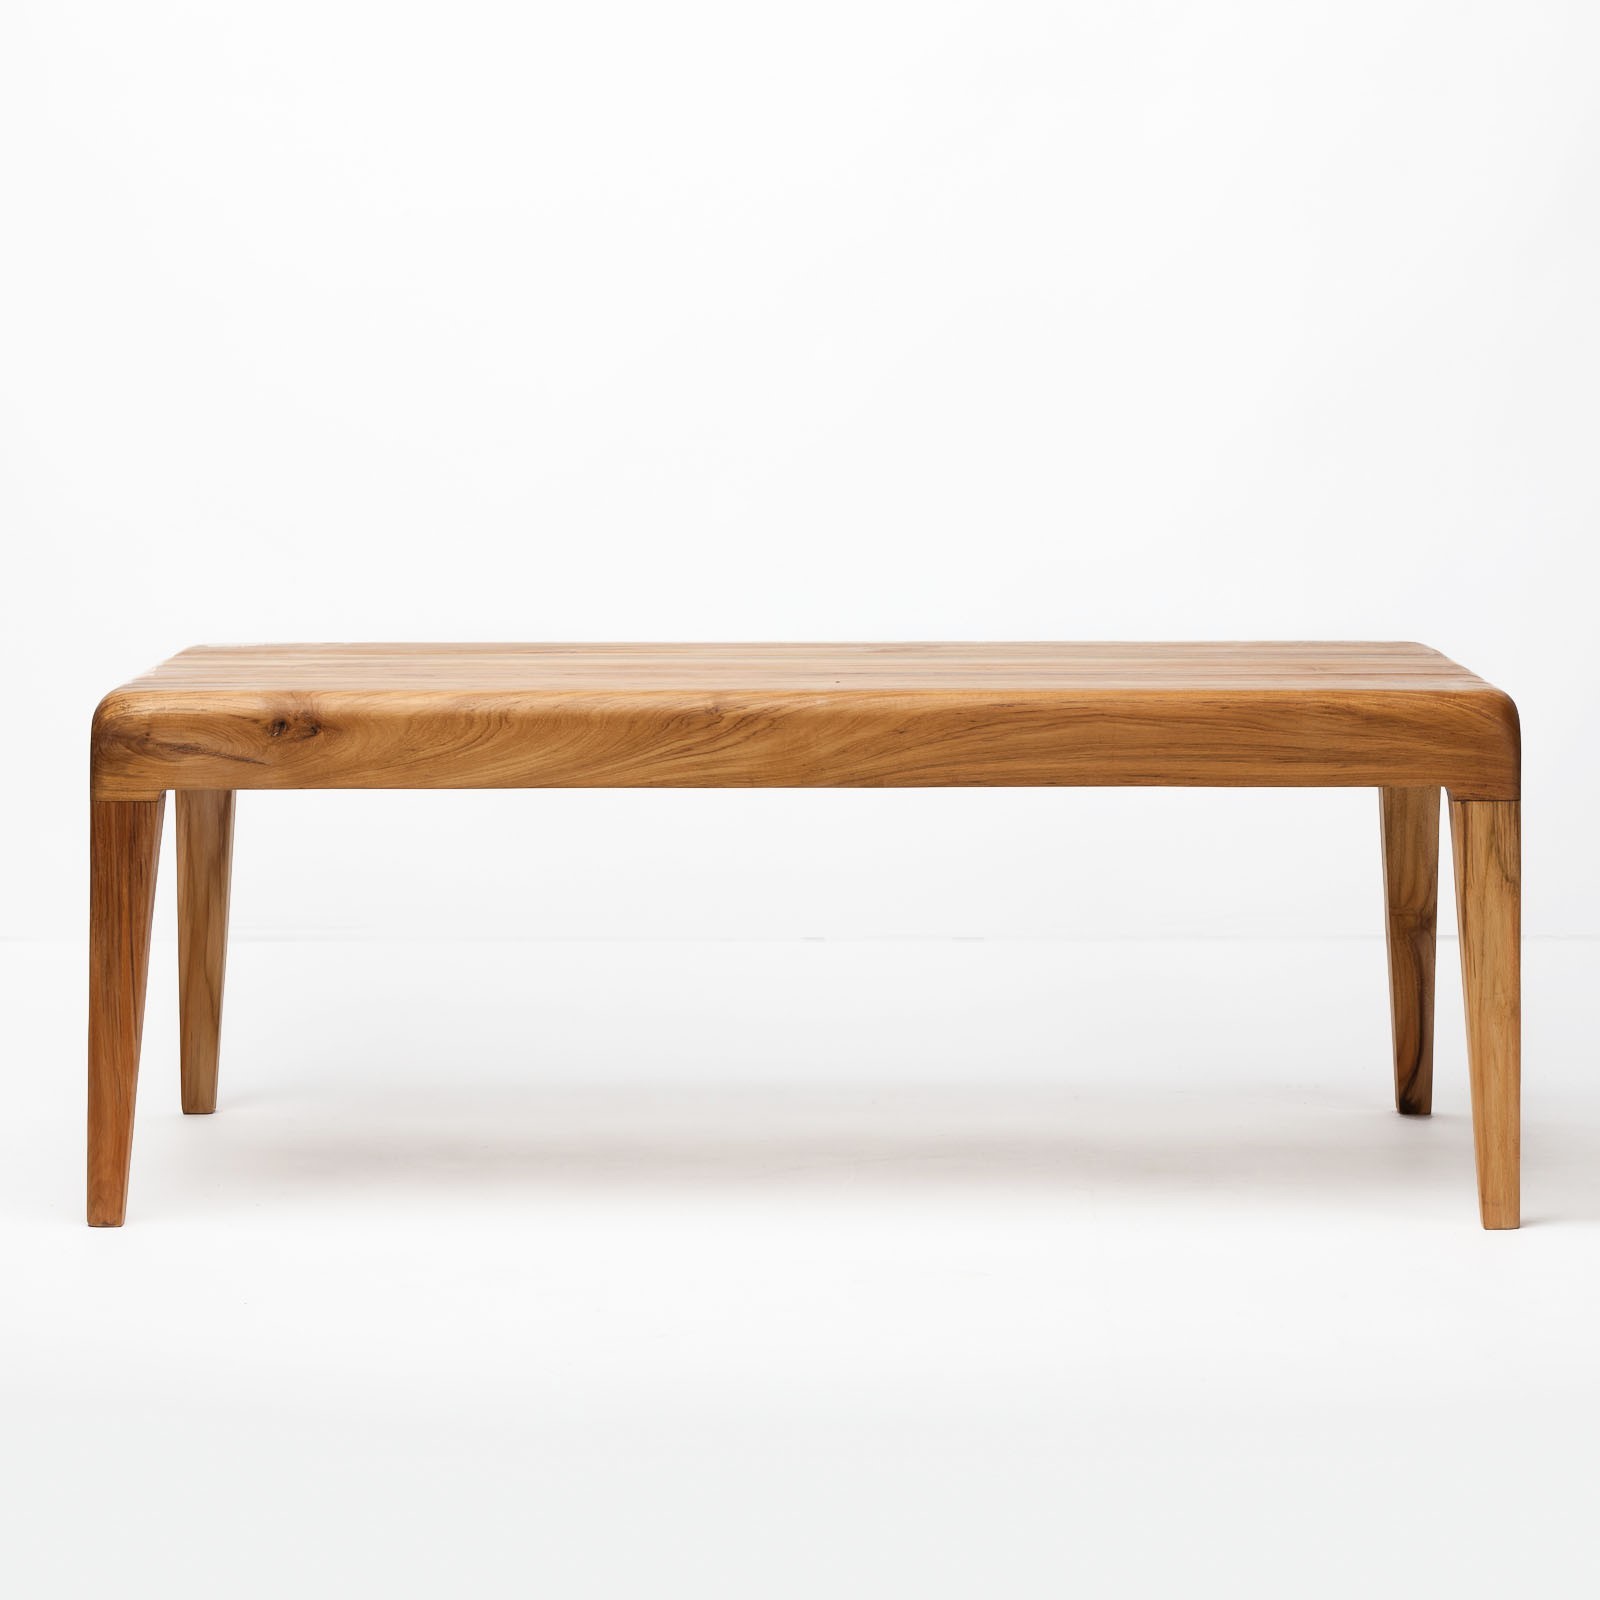 simple wood coffee table designs photo - 6